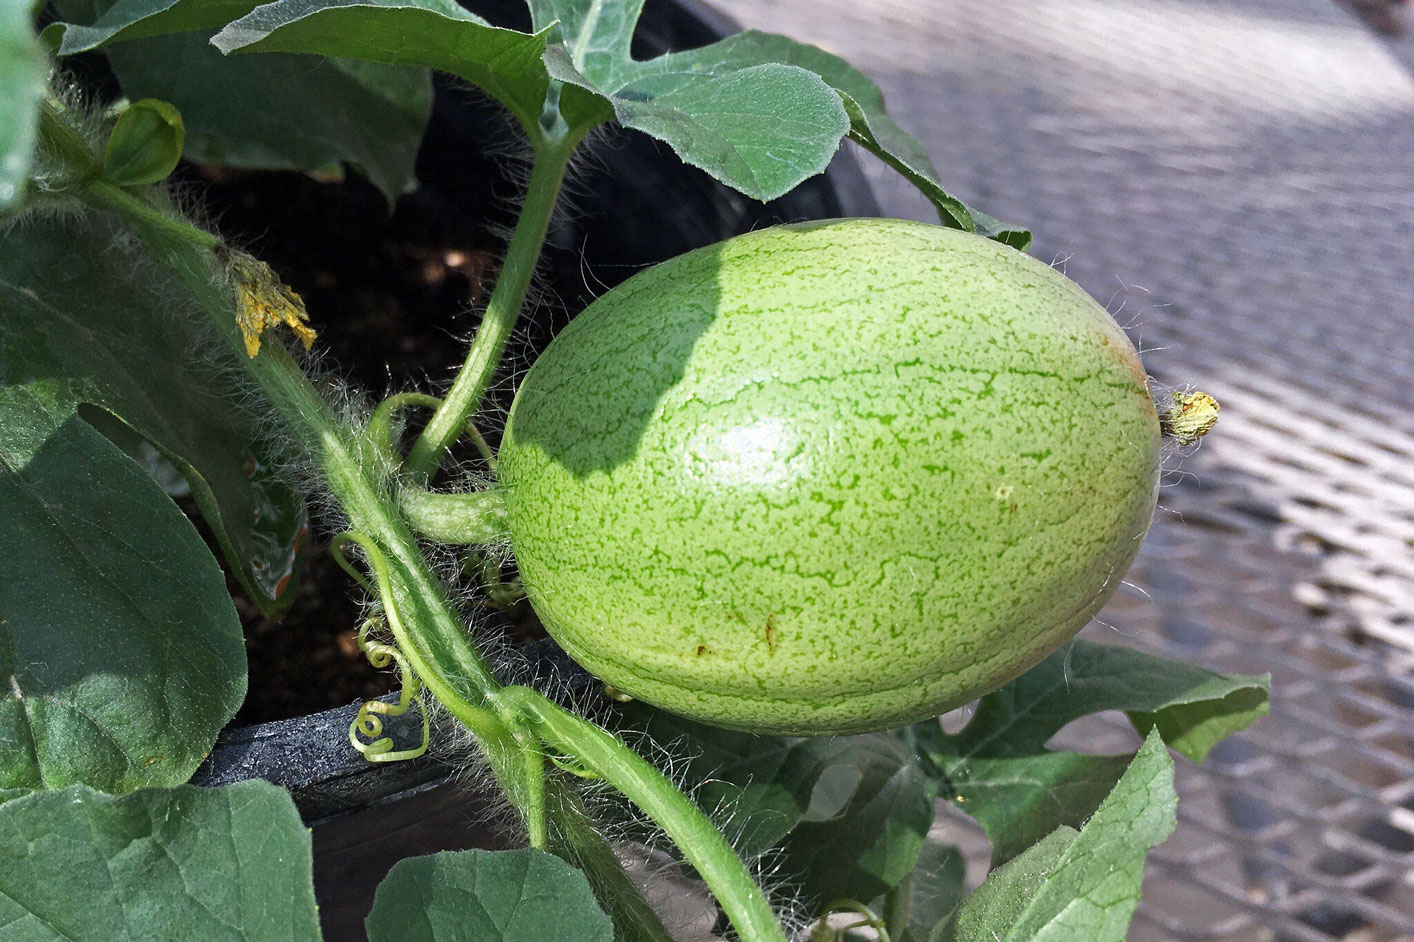 Green melon growing